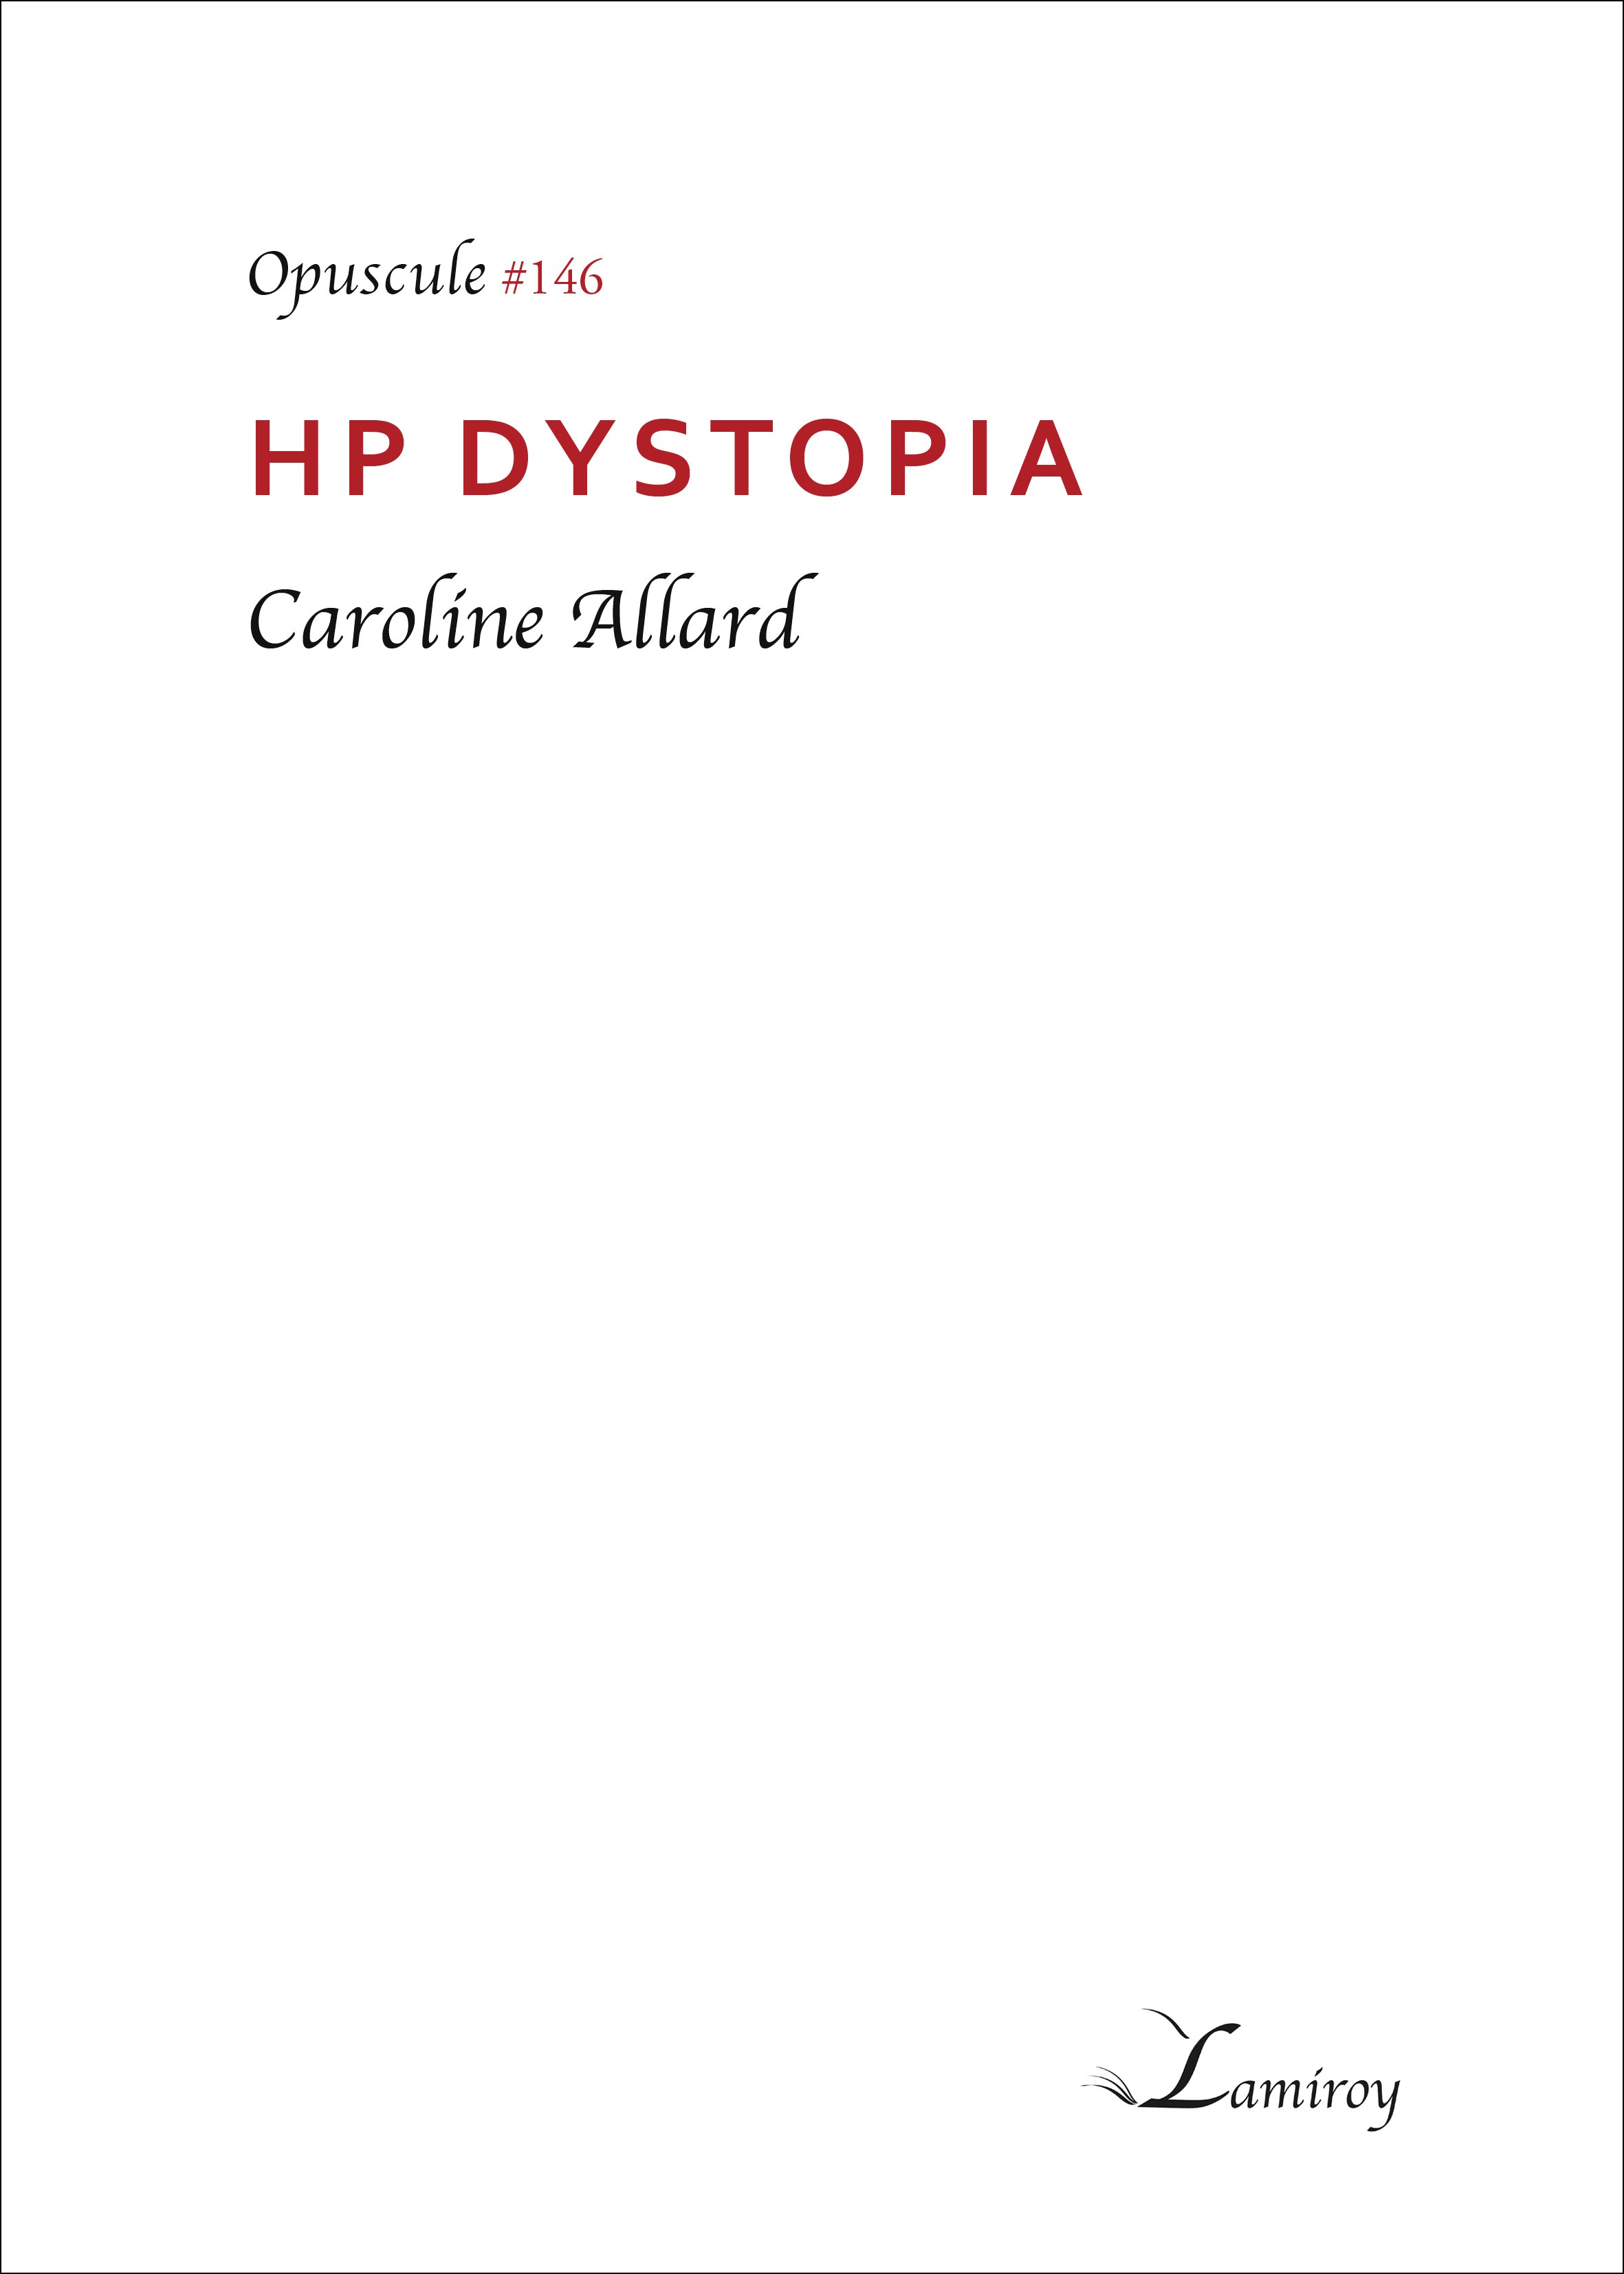 HP Dystopia #146